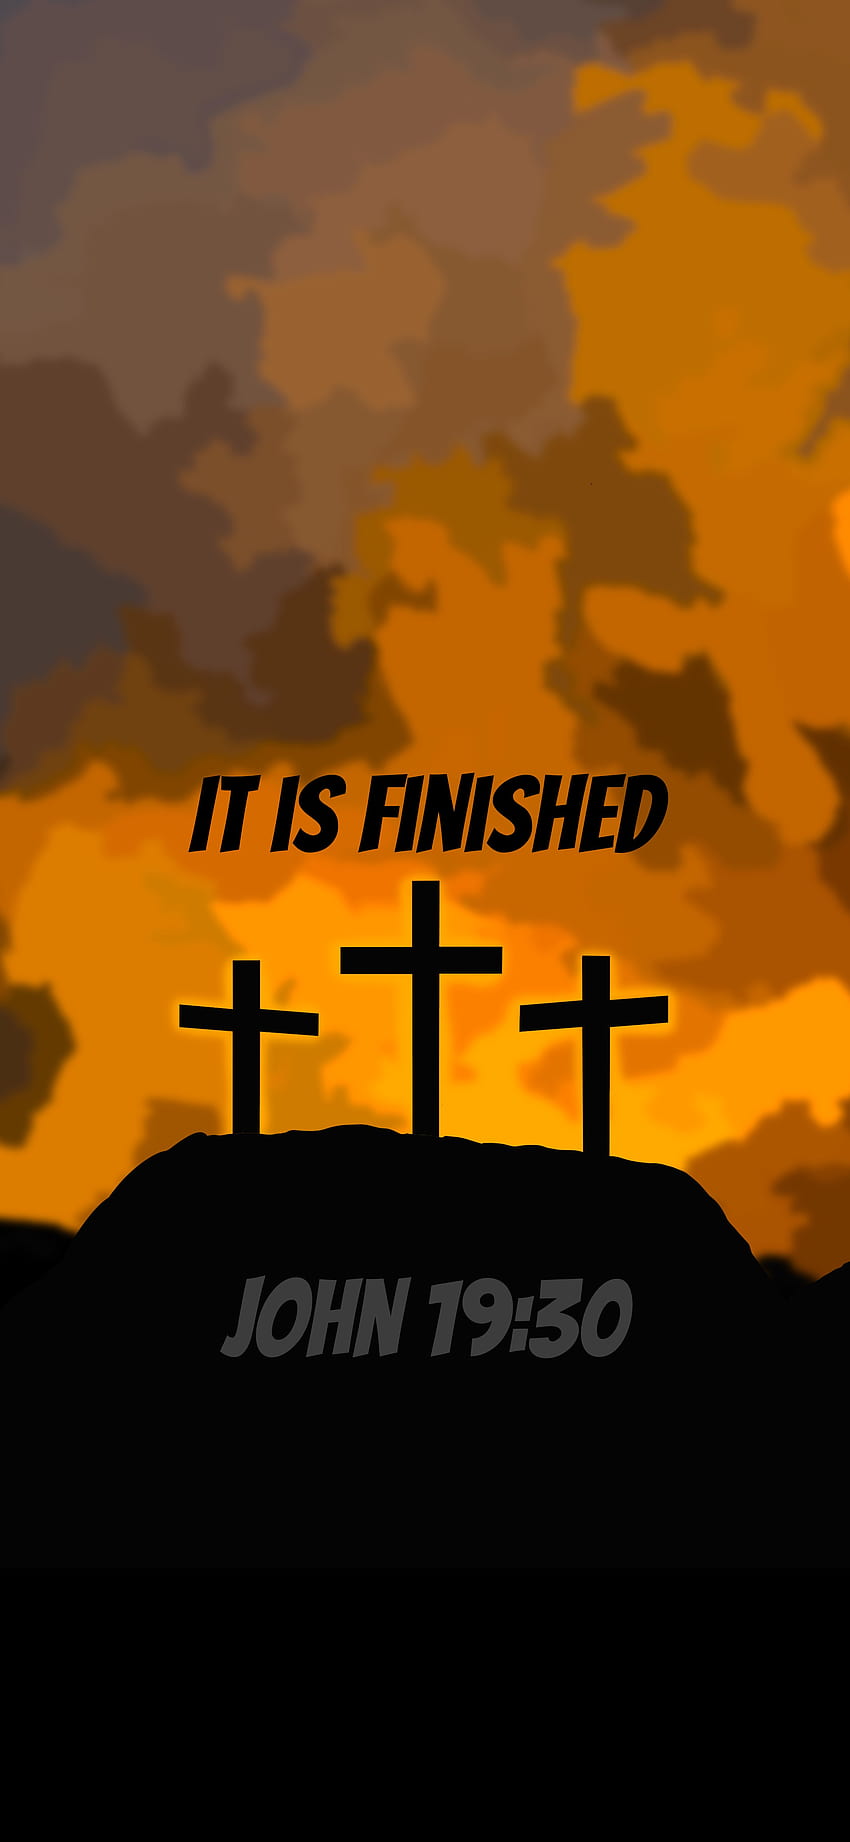 John 19:30, Jesus, Cross, Friday, sunset, Christian, biblical, finished, good HD phone wallpaper